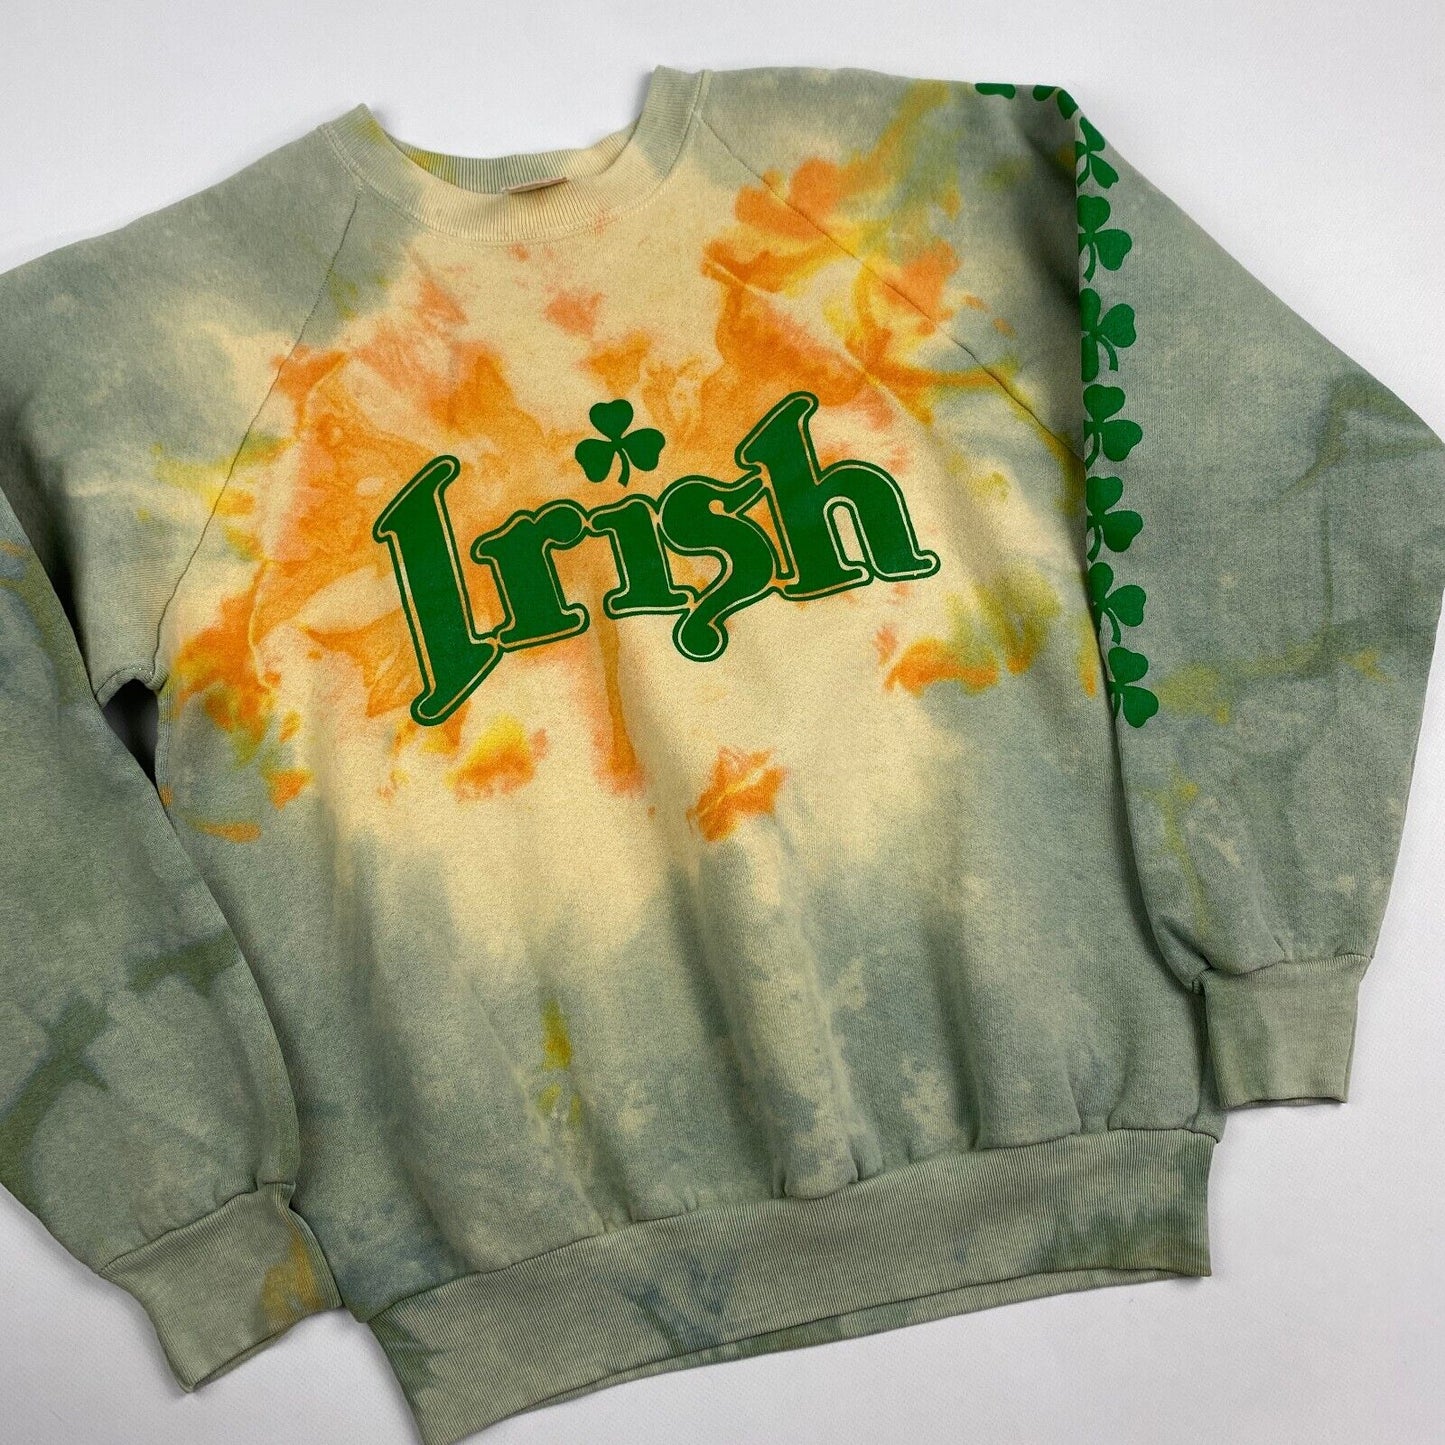 VINTAGE 90s Irish Tye Dye Crewneck Sweater sz Small Men